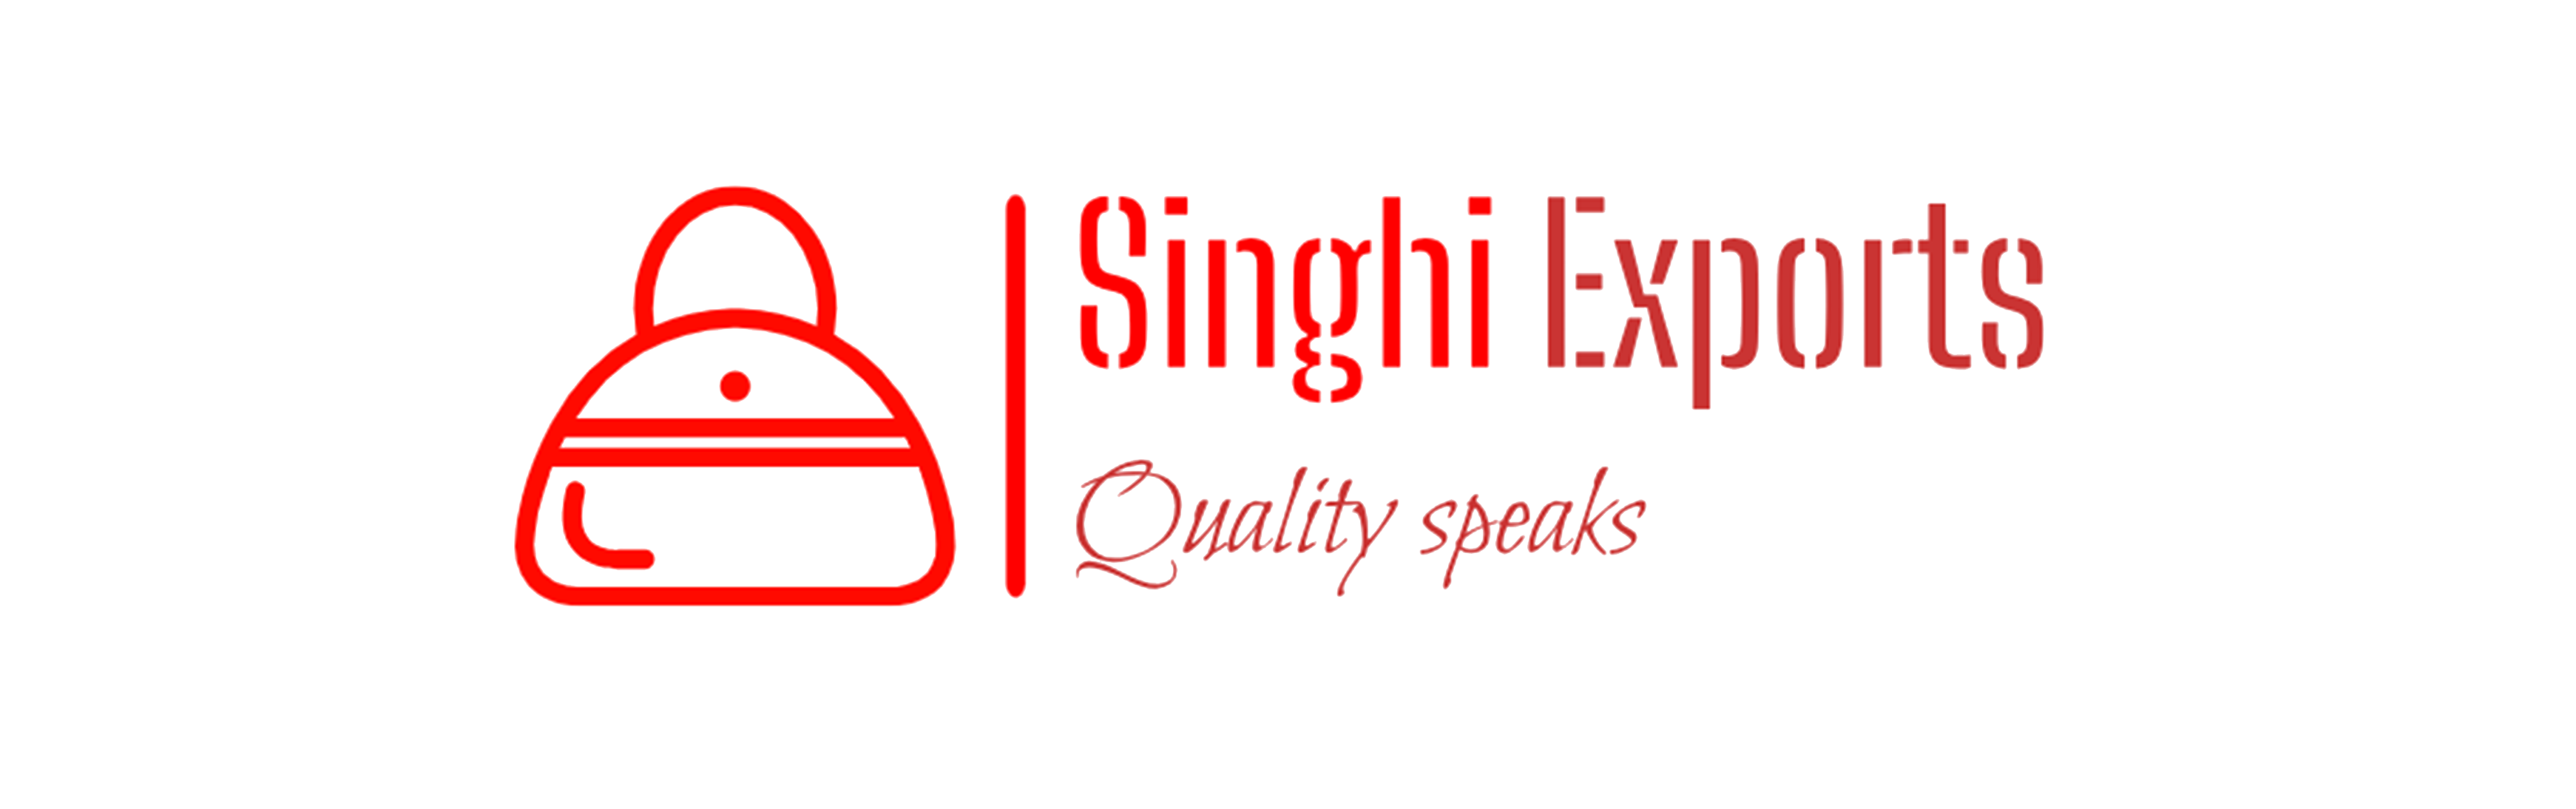 Singhi Exports